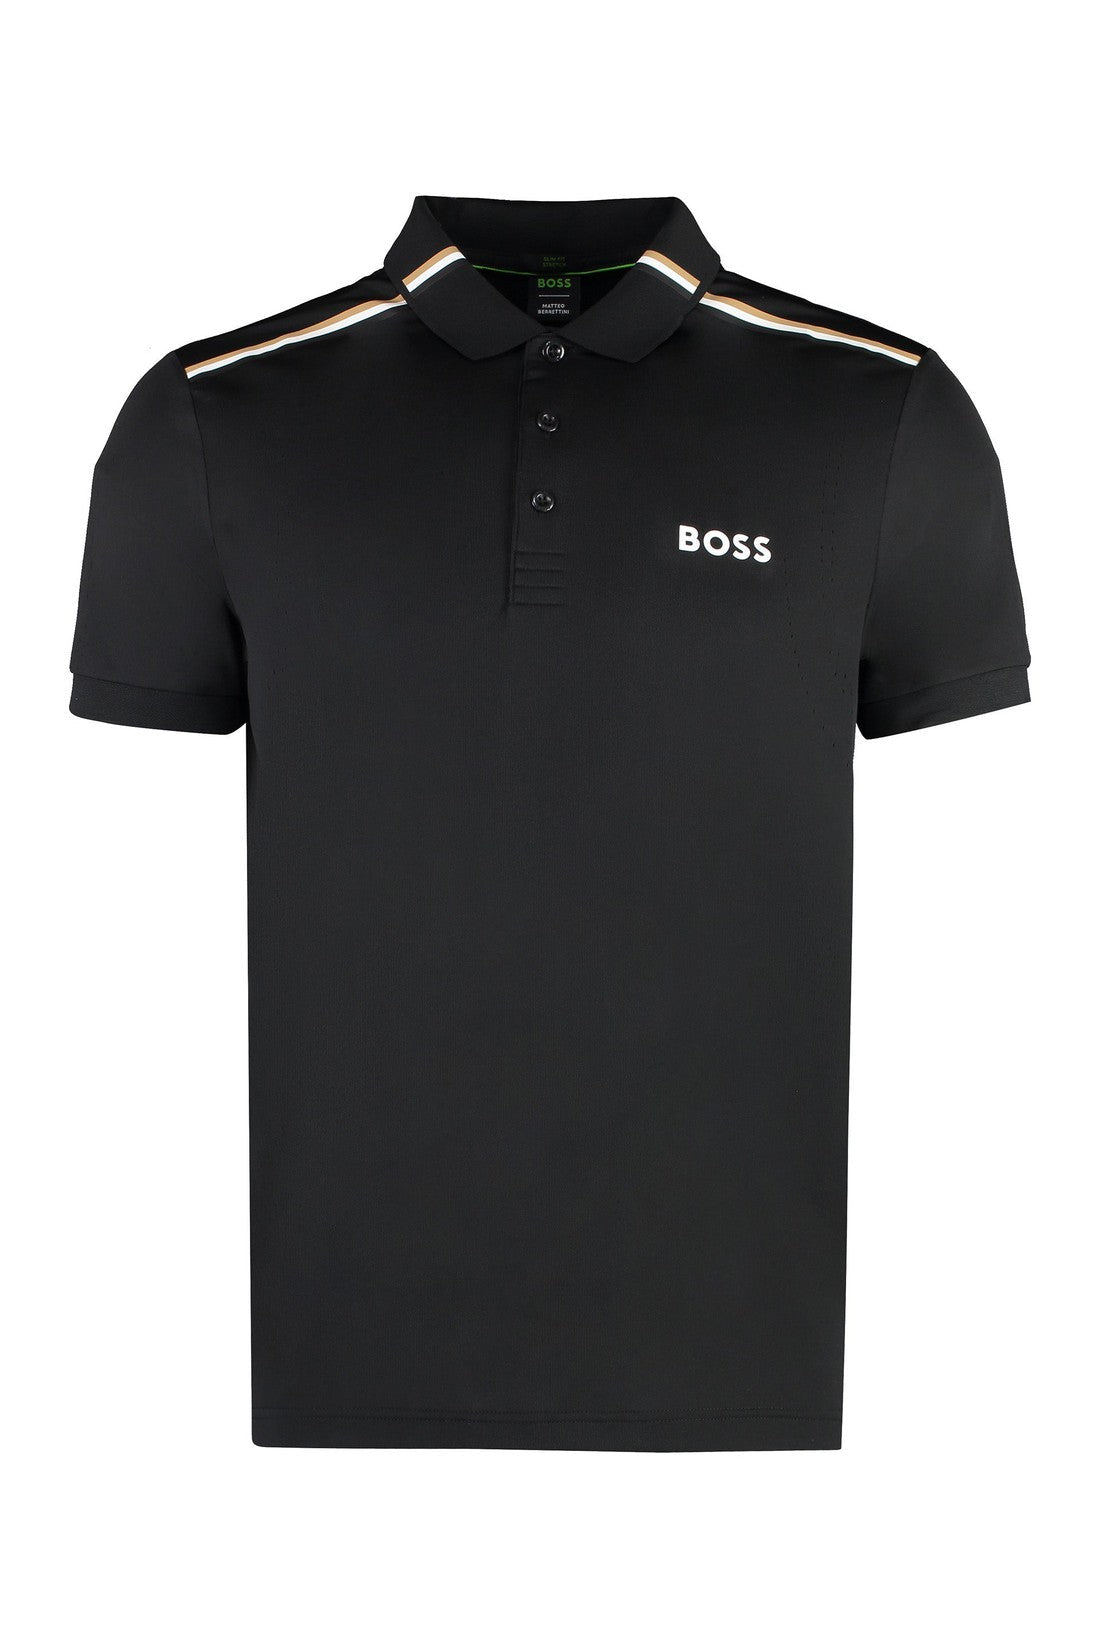 BOSS-OUTLET-SALE-Boss x Matteo Berrettini - Techno jersey polo shirt-ARCHIVIST